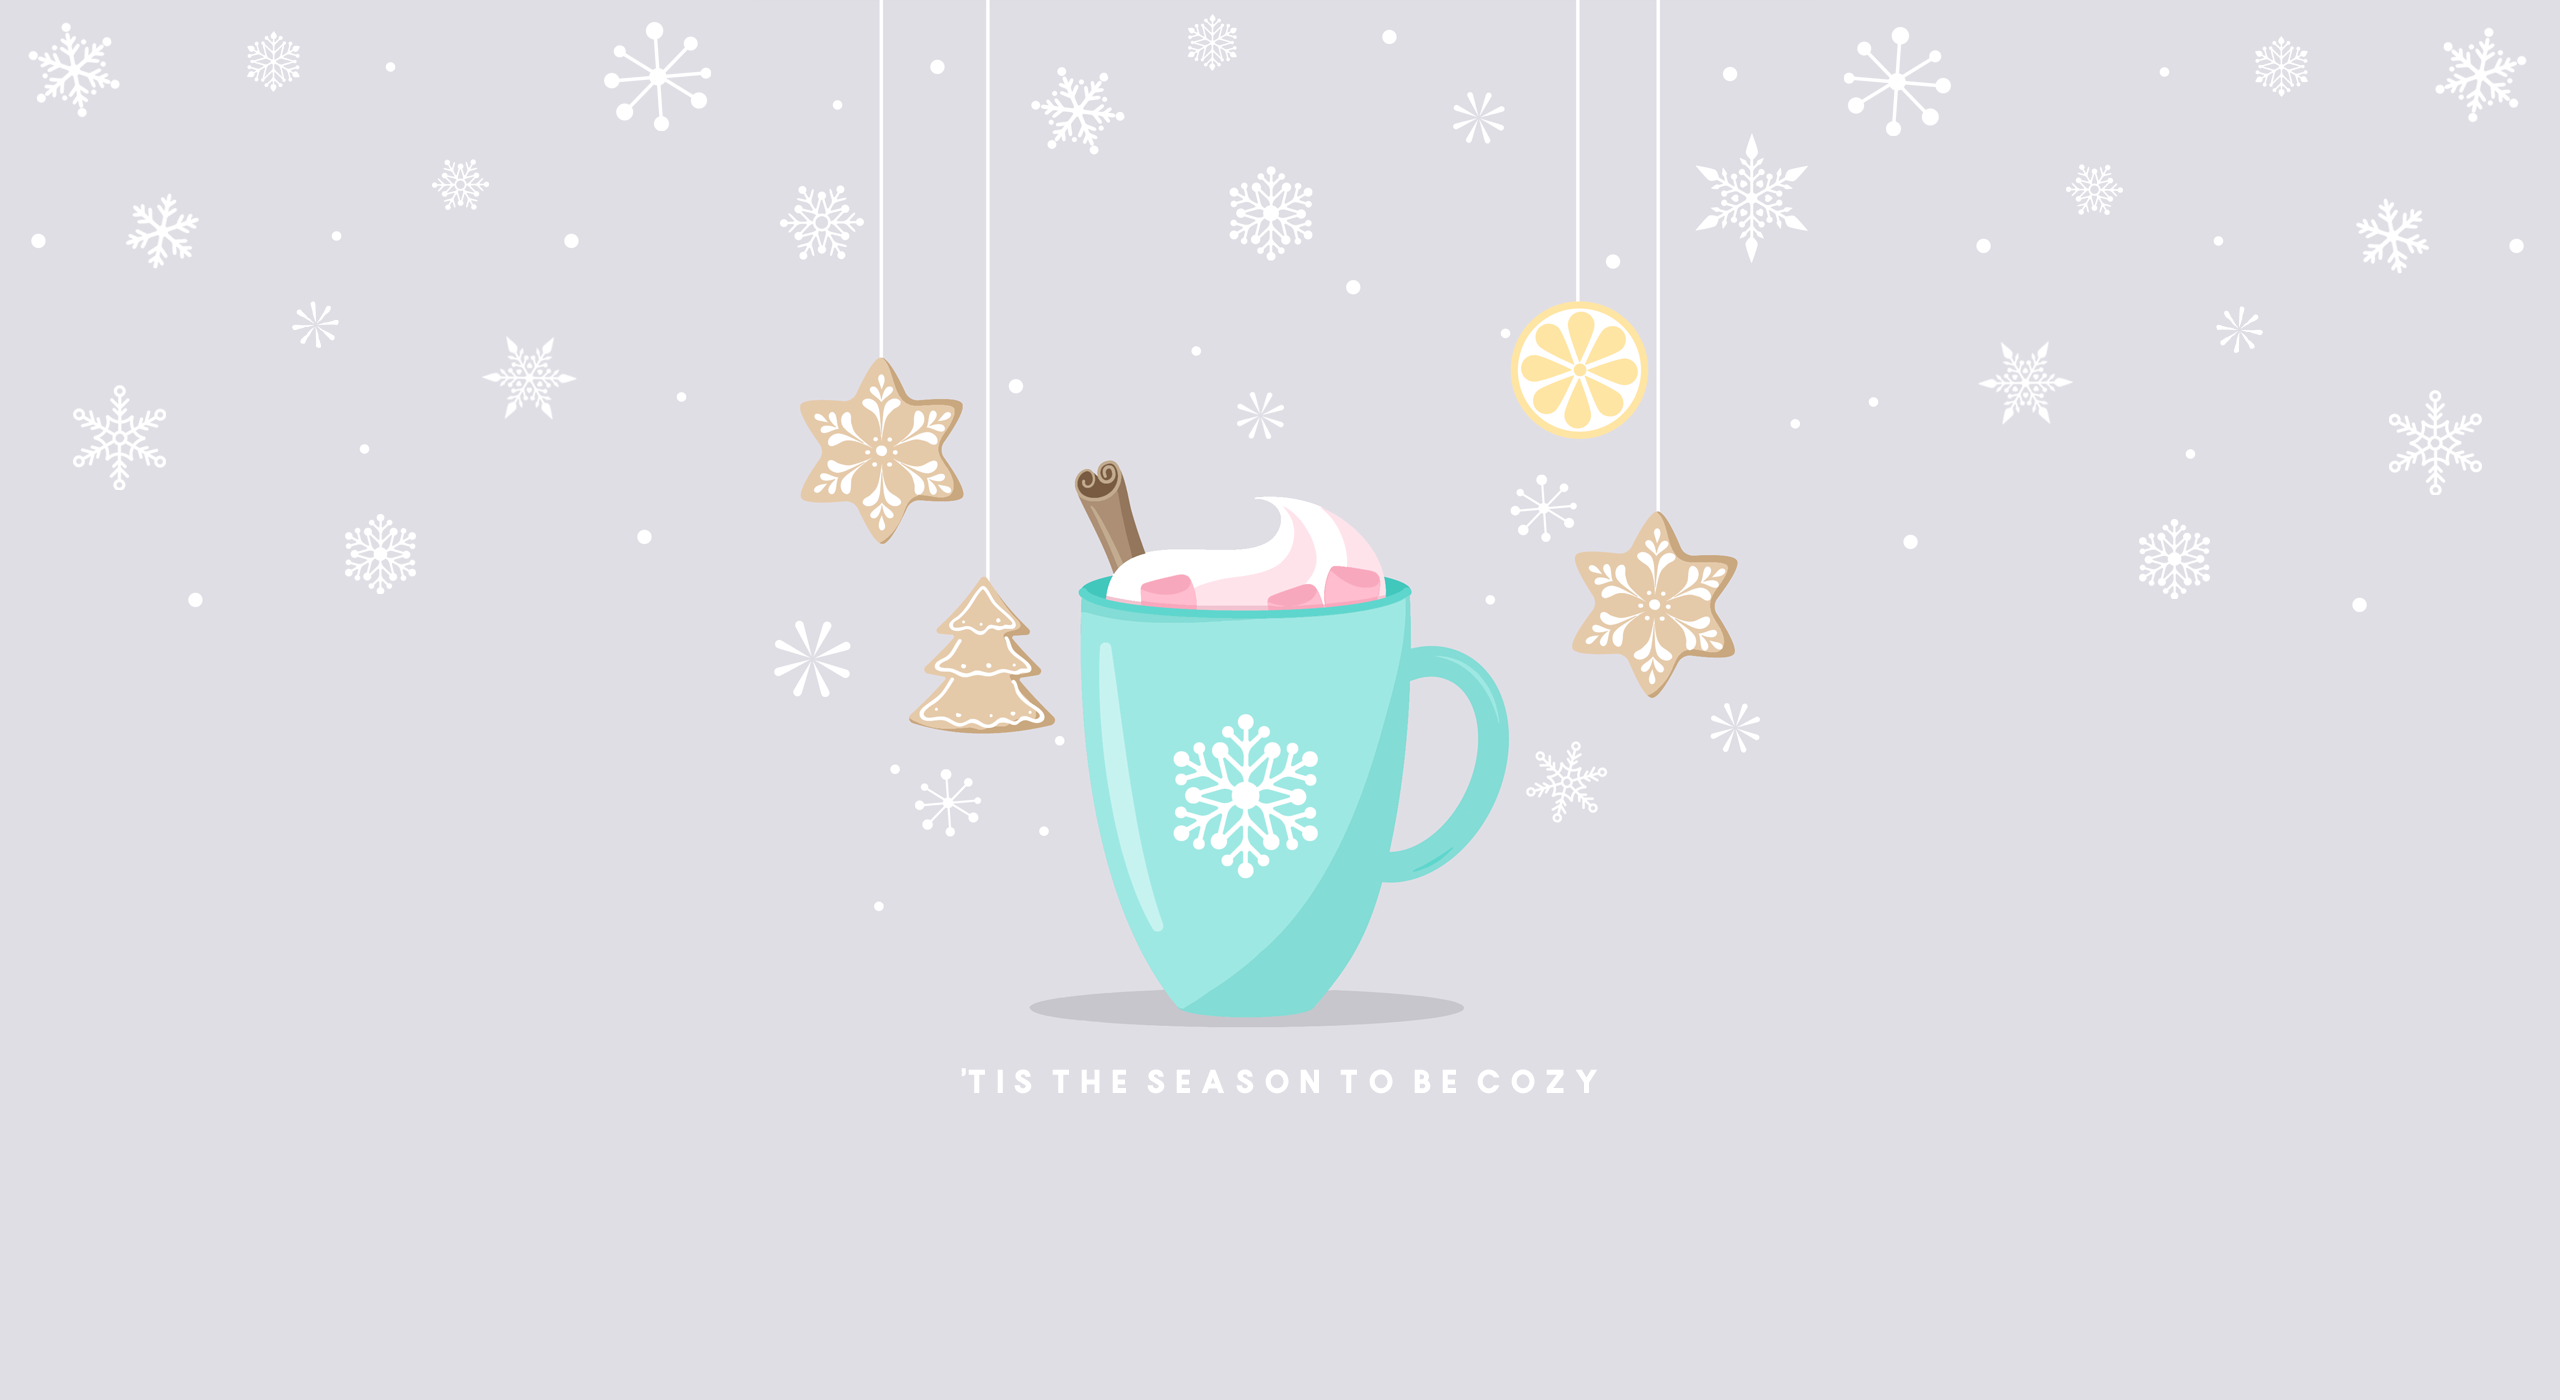 Wallpaper: 'Tis The Season To Be Cozy. Christmas desktop wallpaper, Winter wallpaper, Winter wallpaper desktop